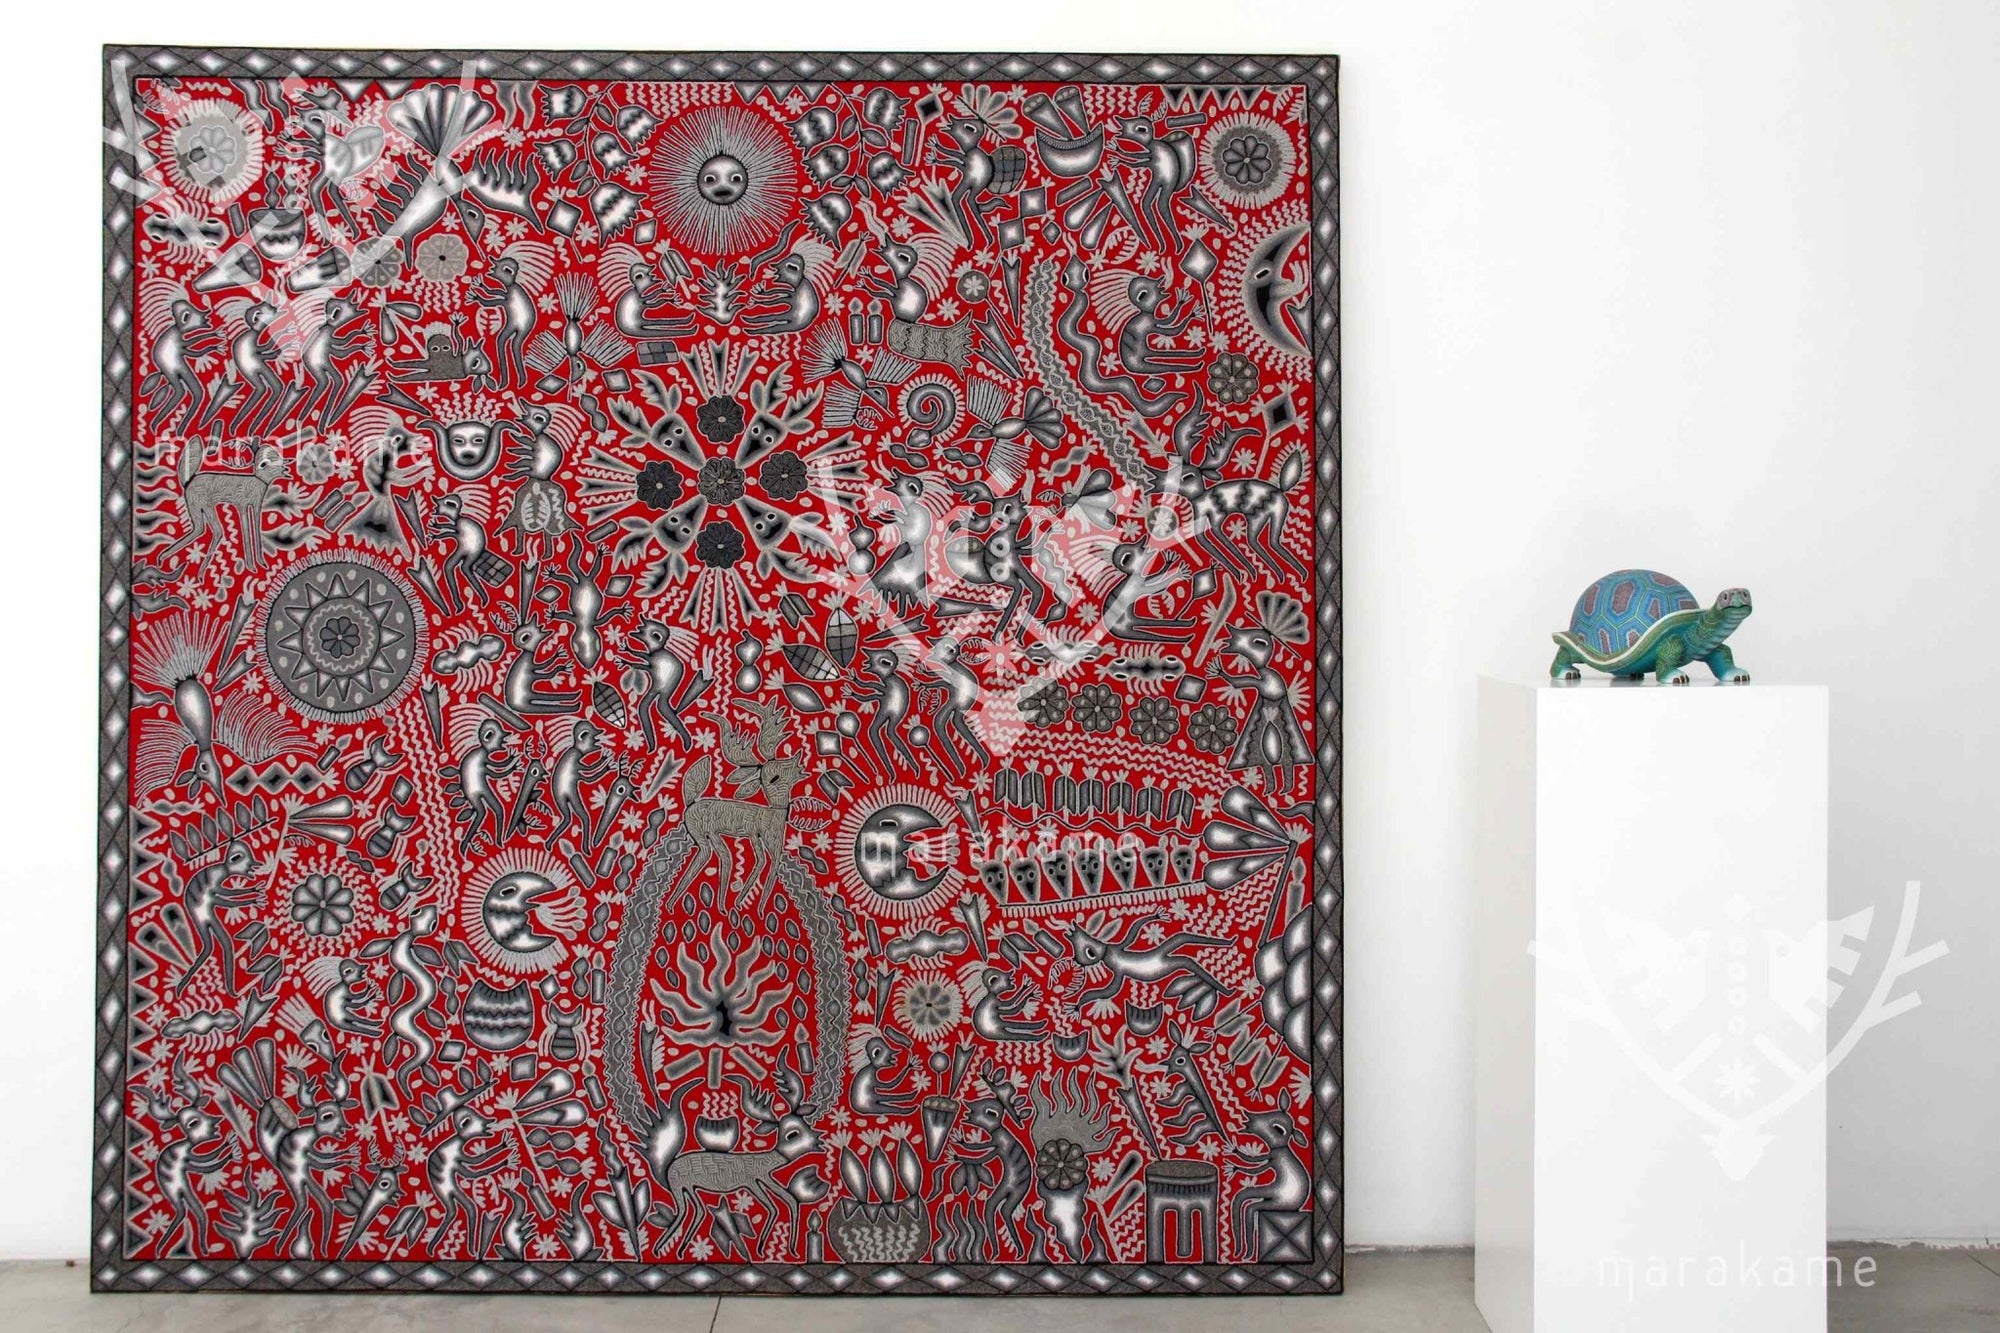 Nierika de Estambre Cuadro Huichol - Hikuri Neixa - 200 x 200 cm. - Arte Huichol - Marakame